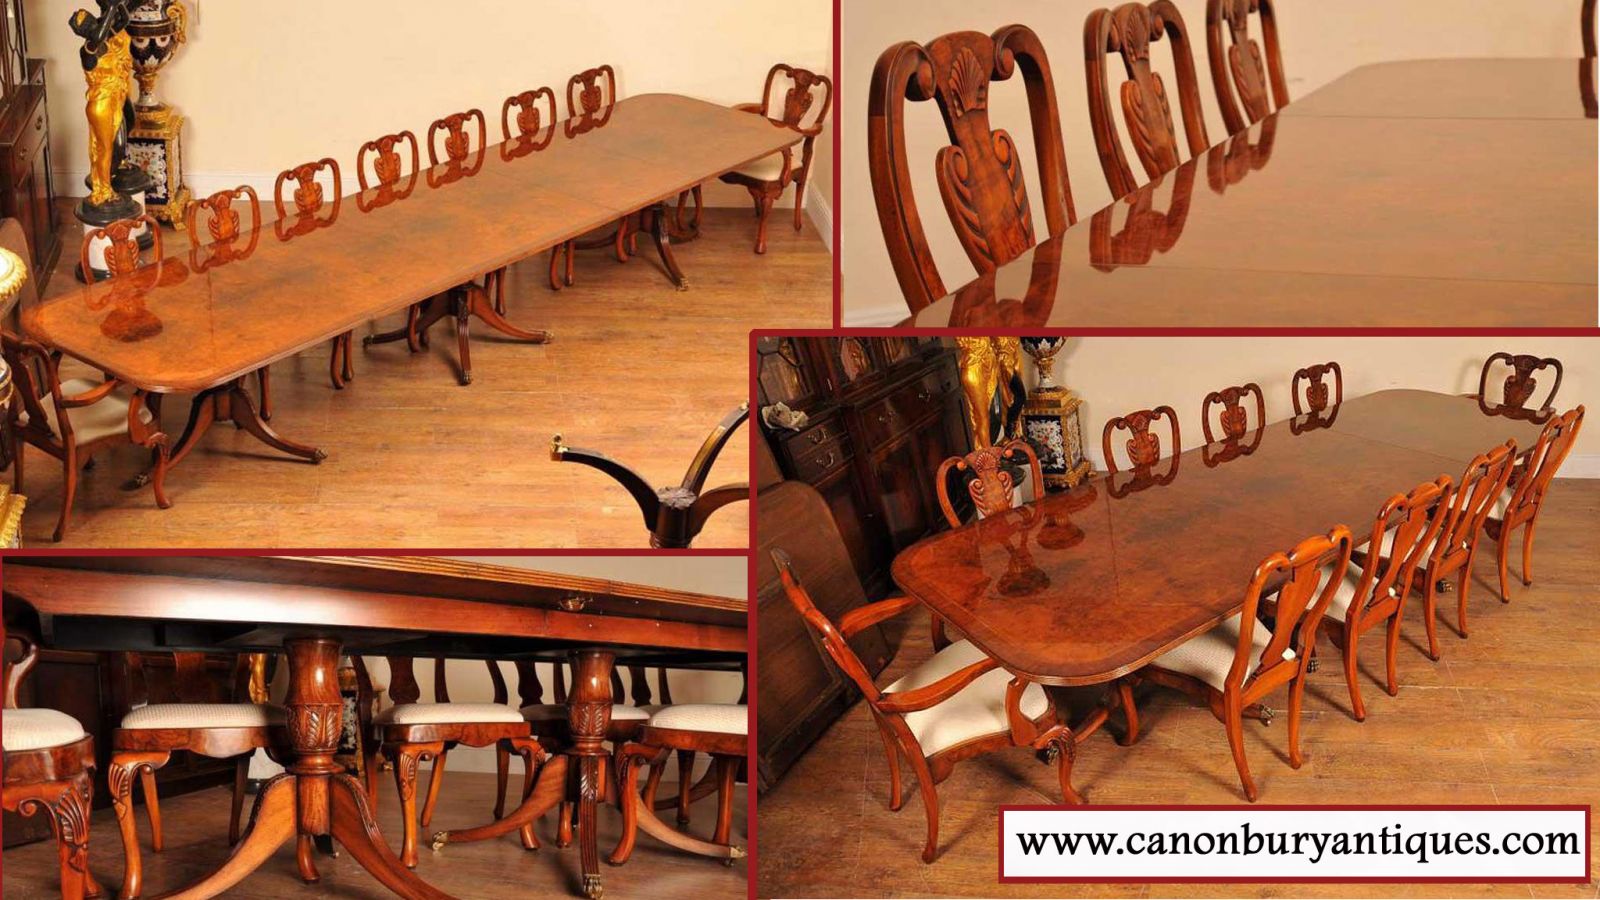 Large Regency Dining Table - Walnut Pedestal Tables Seats 18 People